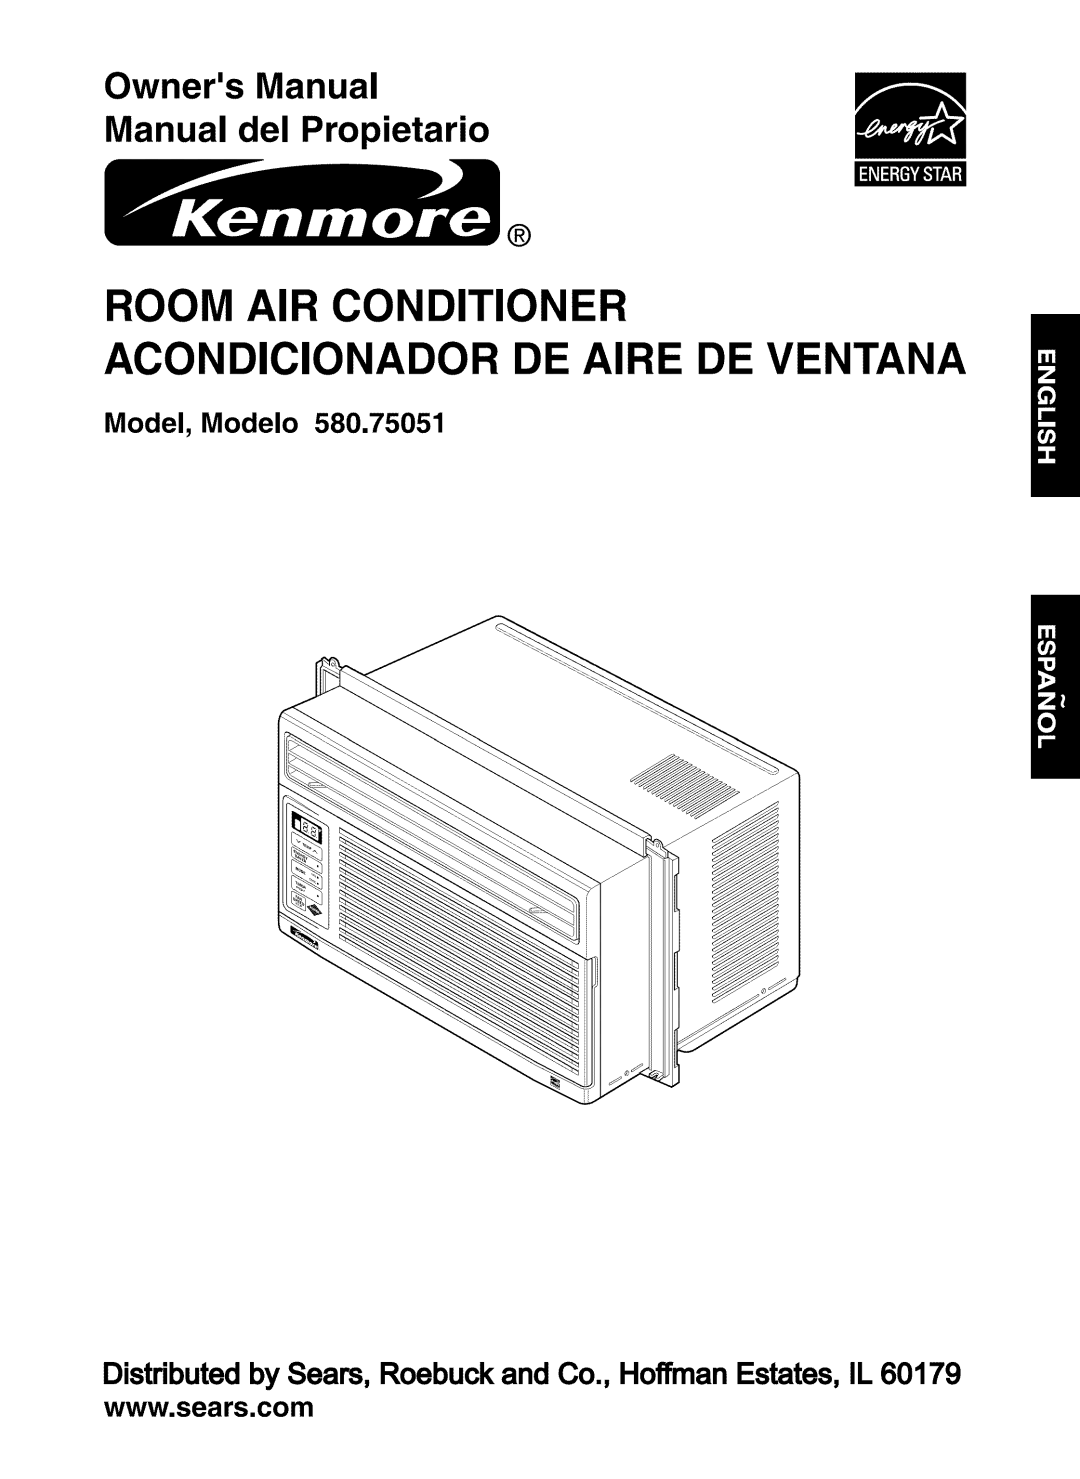 Kenmore 580.75051 owner manual OwnersManual Manual del Propietario, Model, Modelo, Iqt q l €idS,,if t 